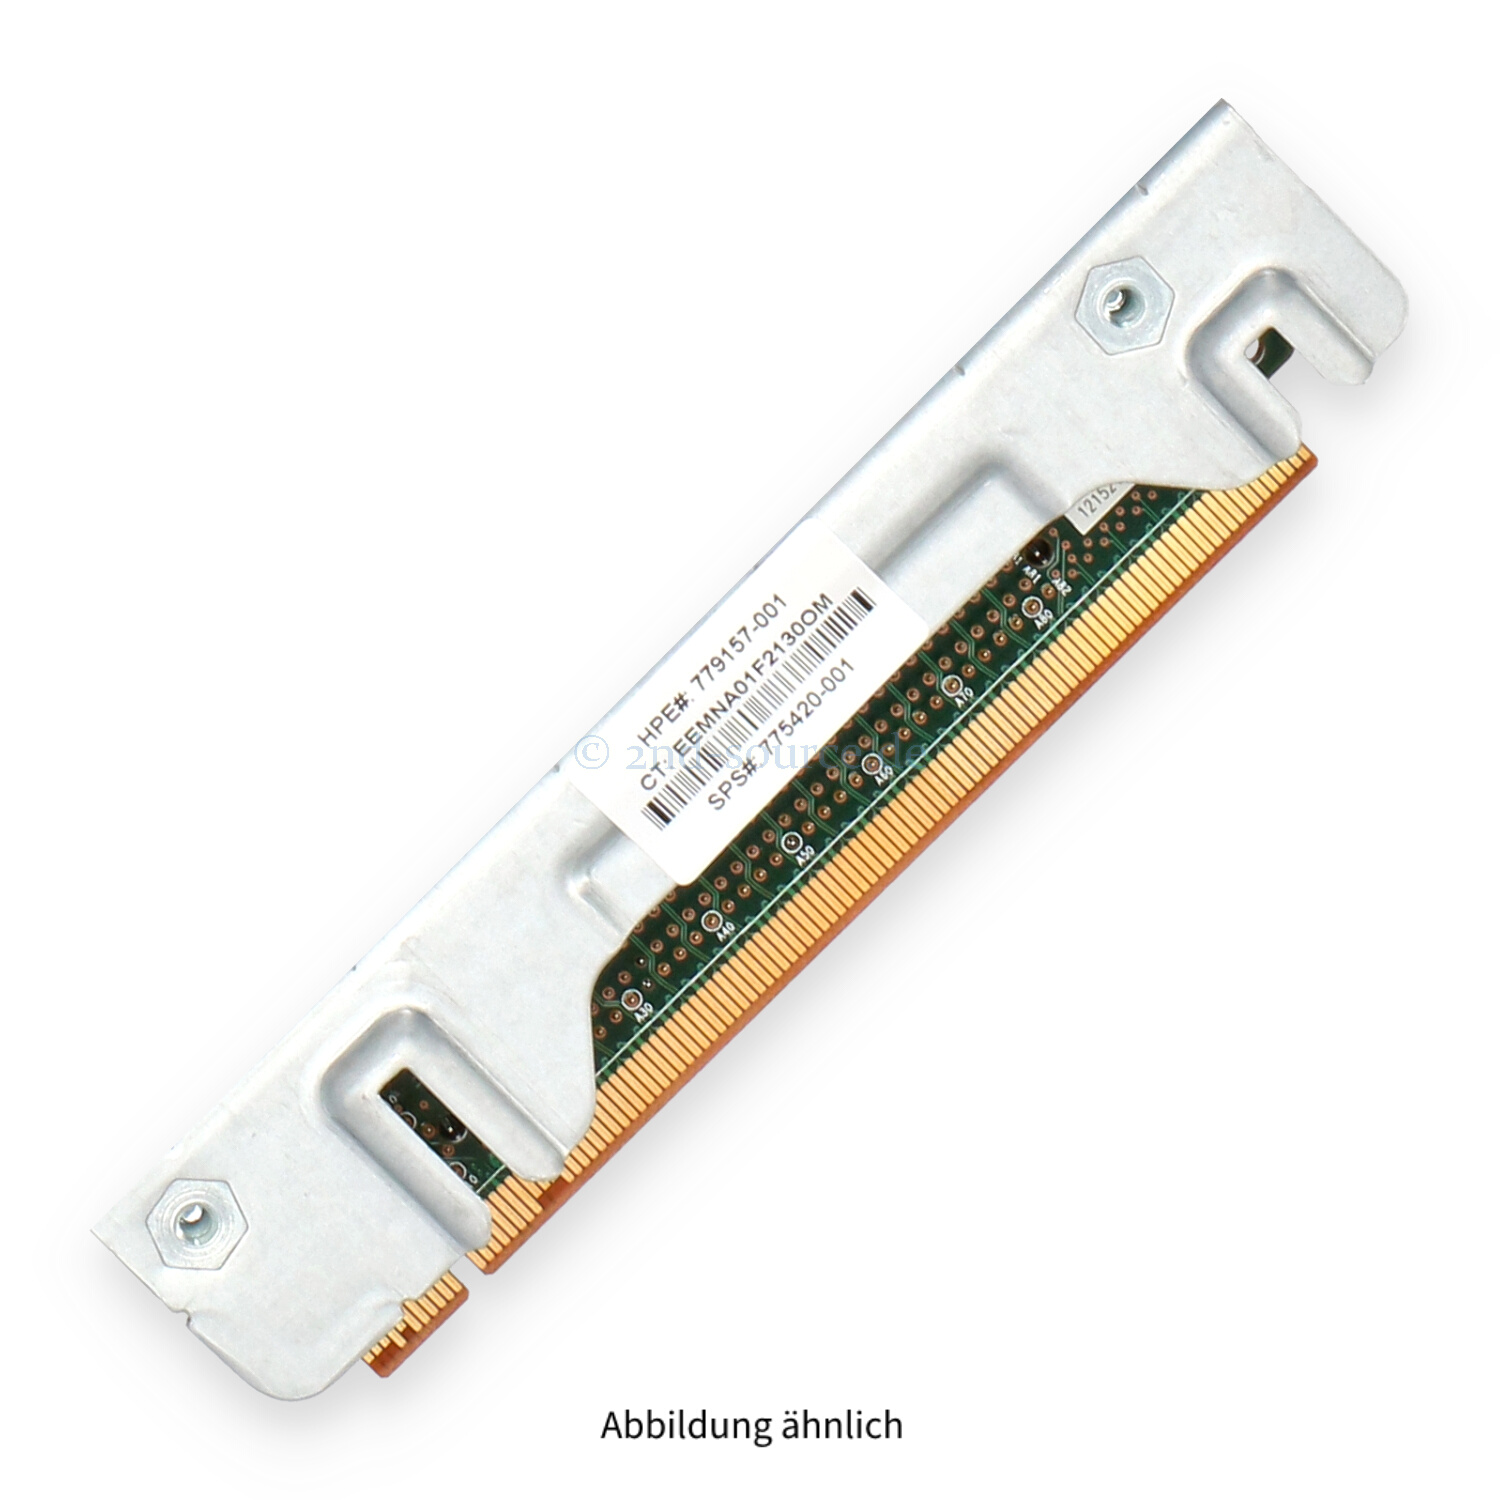 HPE PCIe Riser Card DL360 G9 764642-B21 775420-001